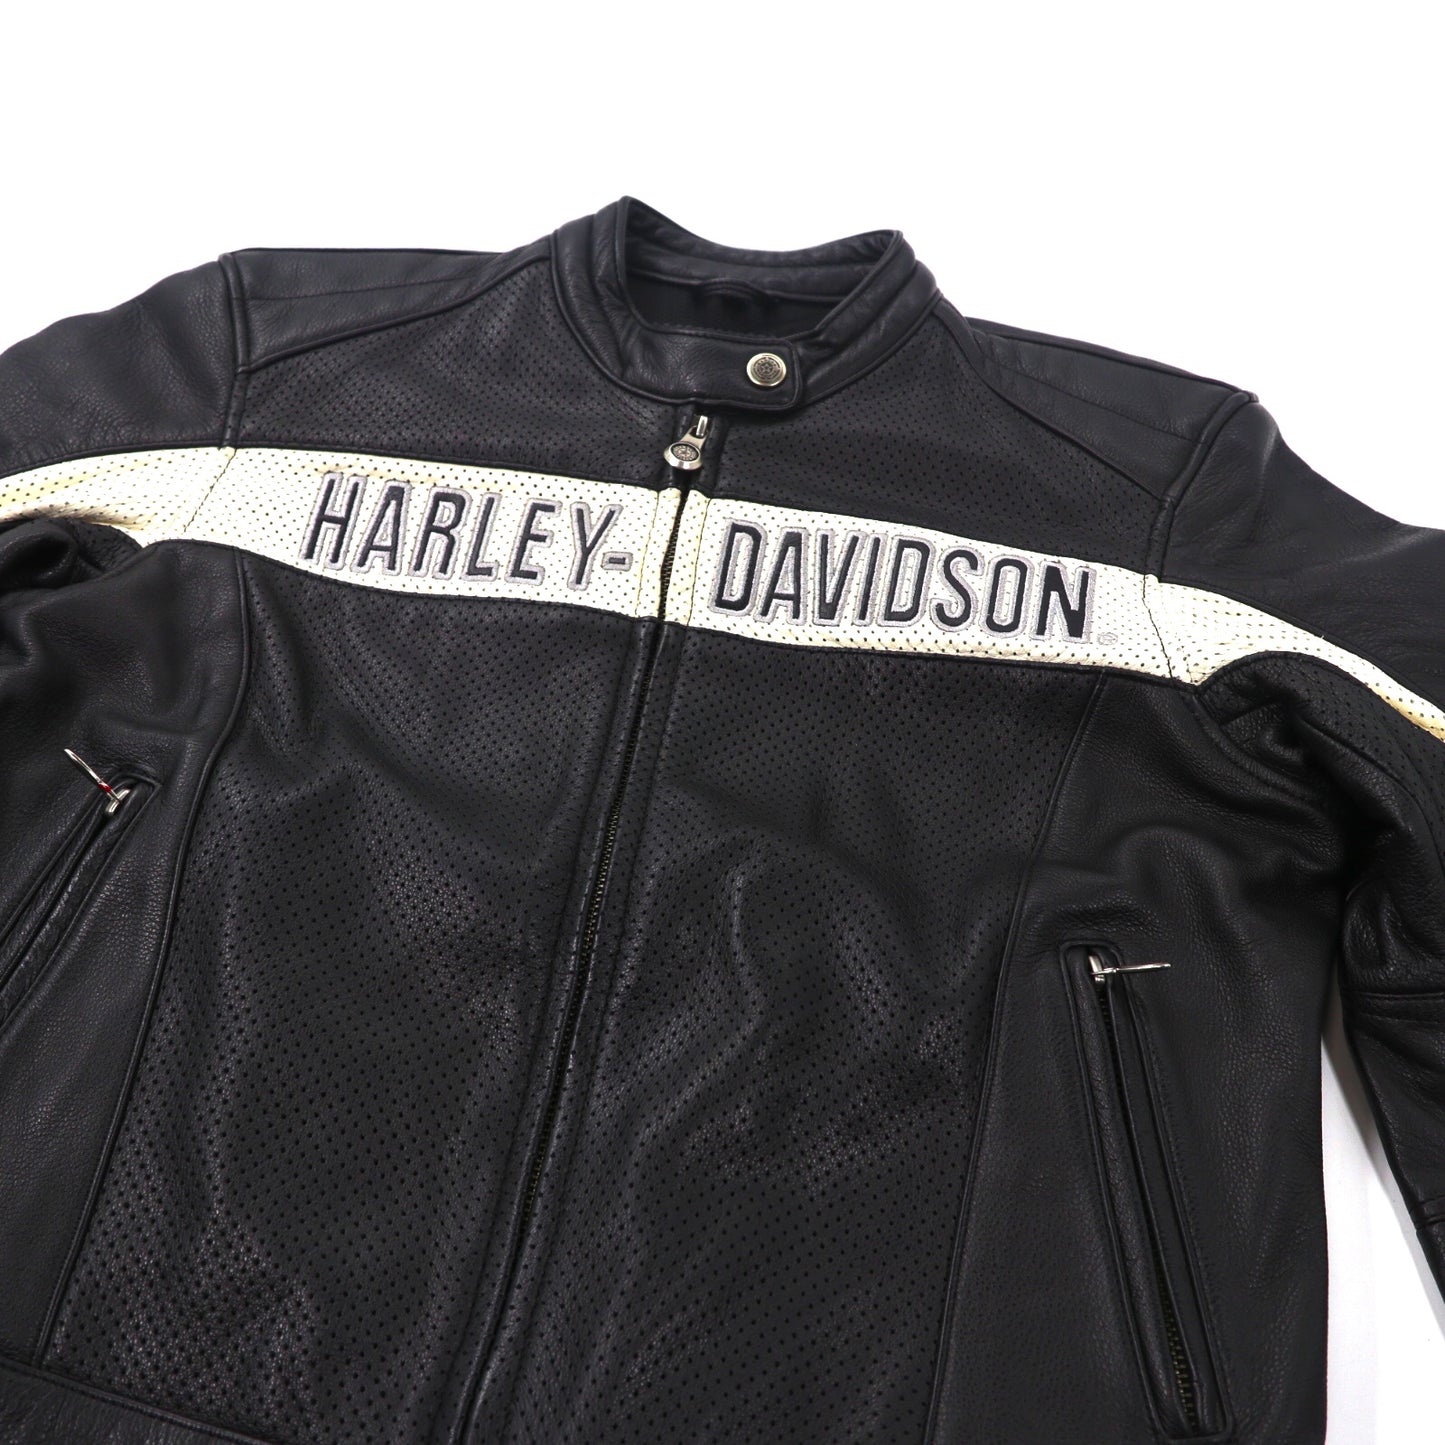 HARLEY DAVIDSON ライダースジャケット ブラック パンチングレザー-